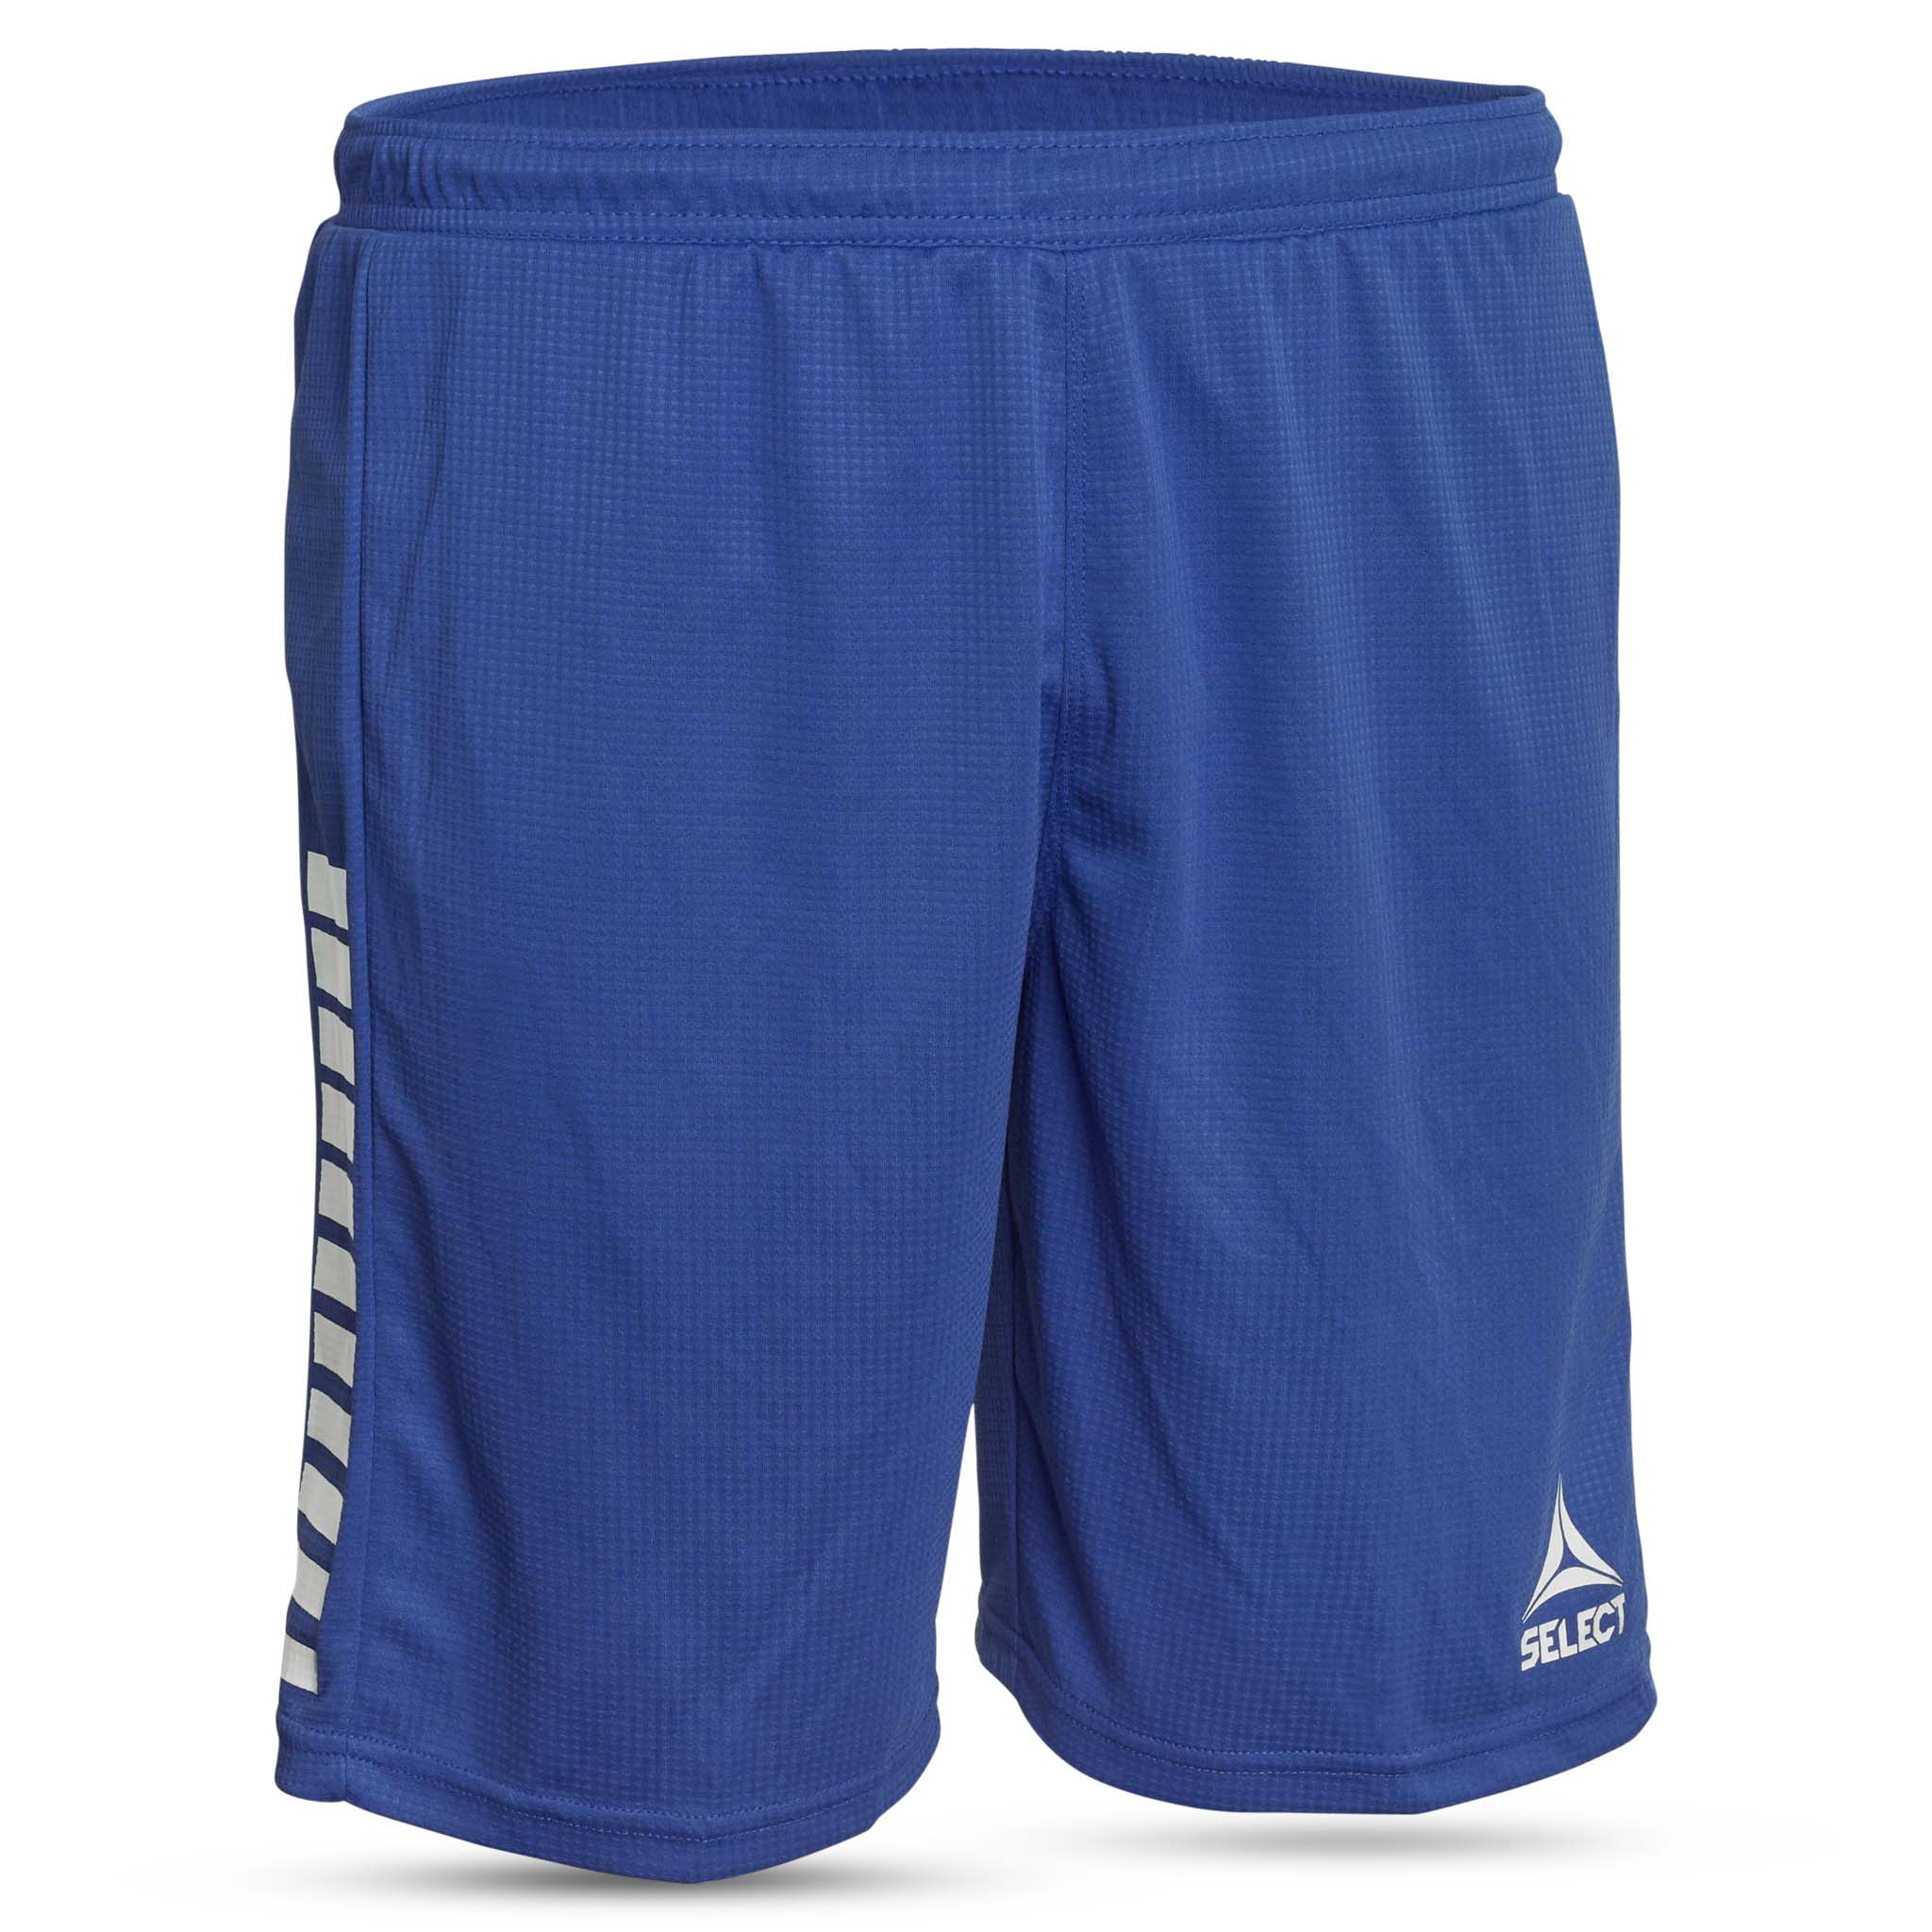 Player shorts - Monaco, youth #colour_blue